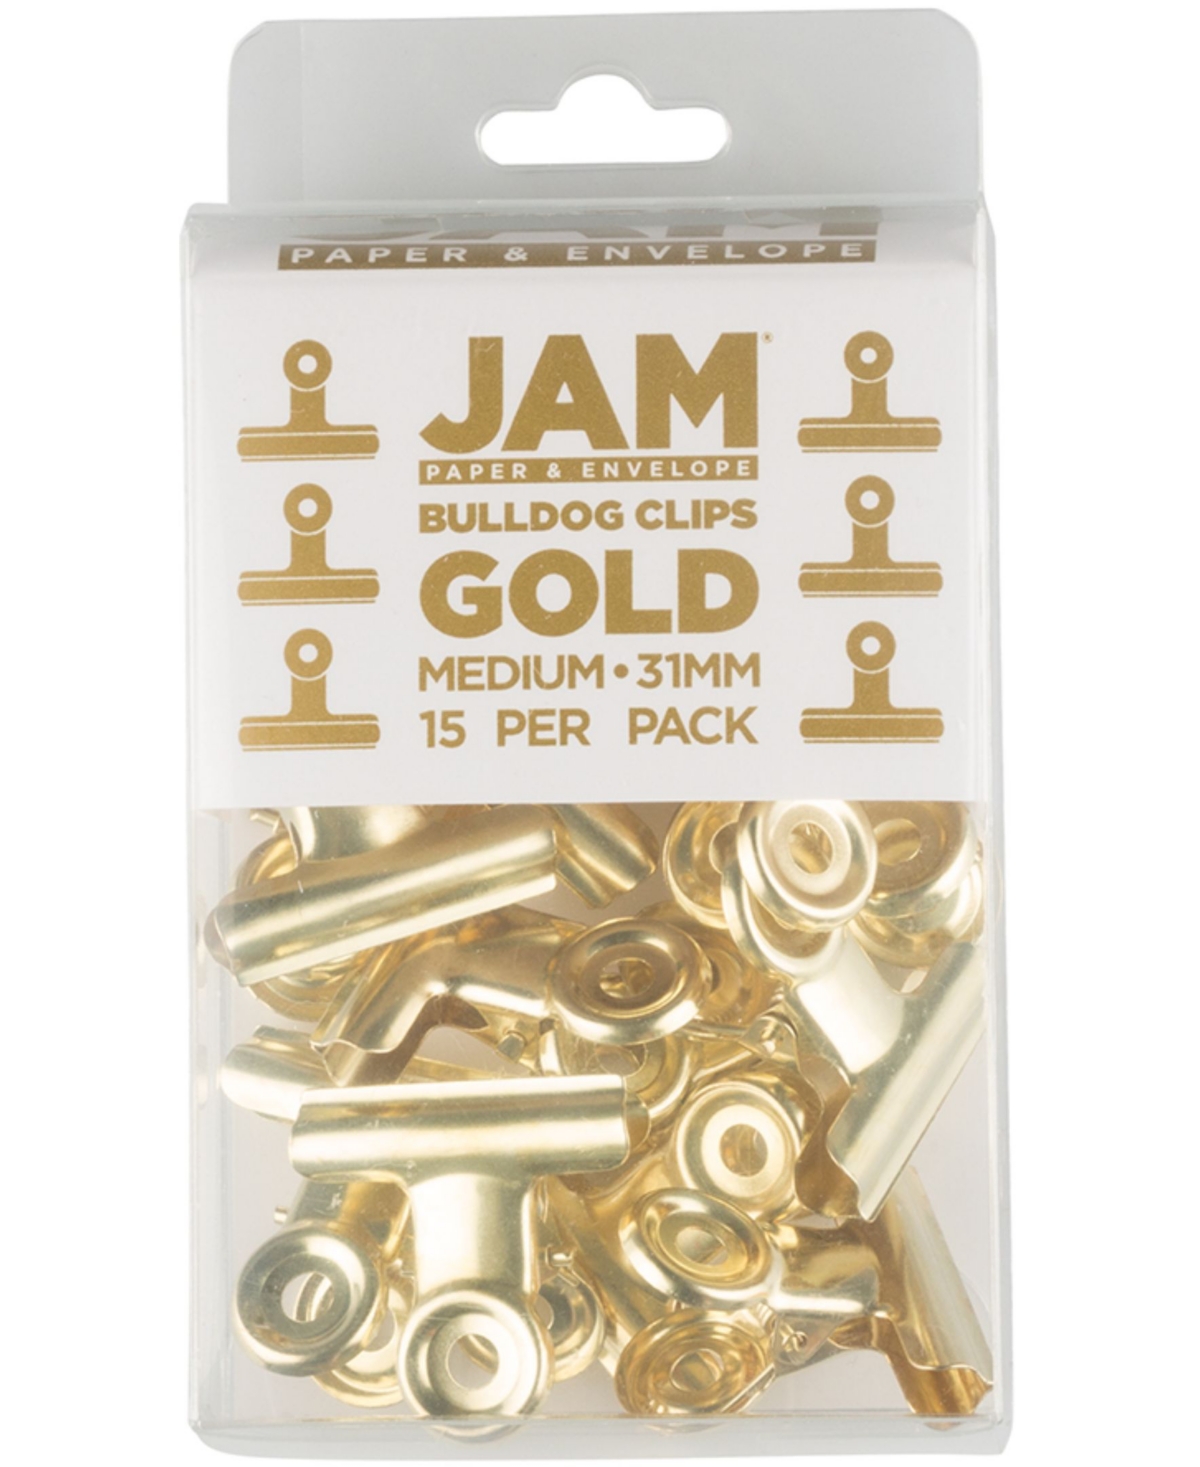 Jam Paper Metal Bulldog Clips In Gold